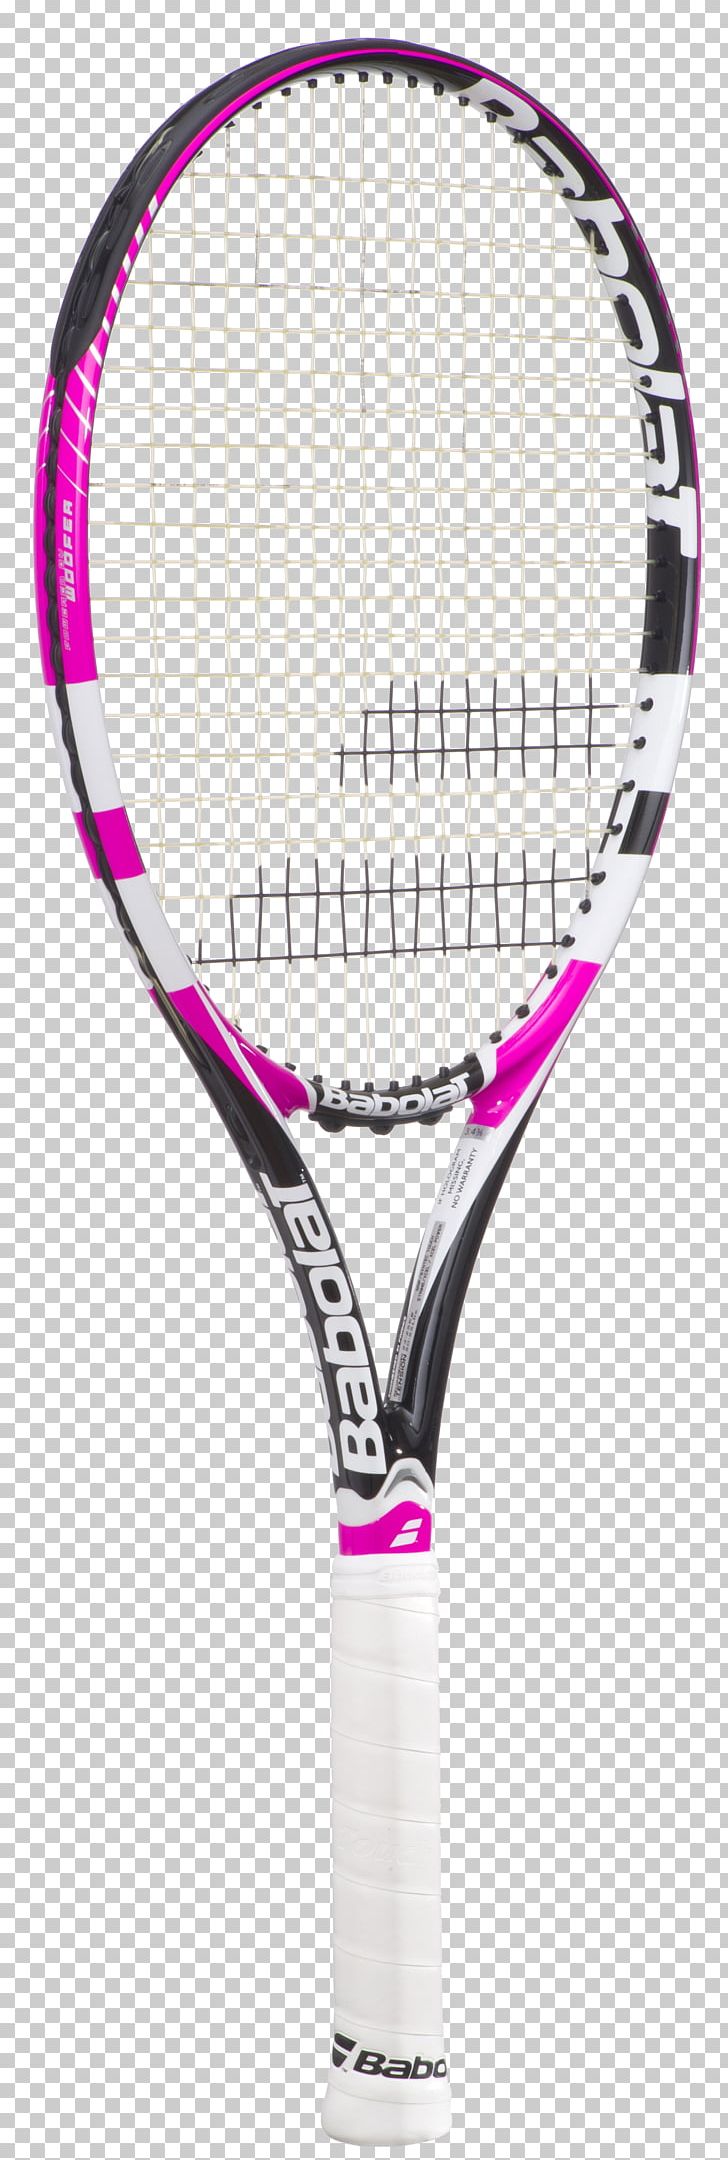 Strings Babolat Racket Tennis Rakieta Tenisowa PNG, Clipart, Babolat, Badminton, Line, Padel, Purple Free PNG Download